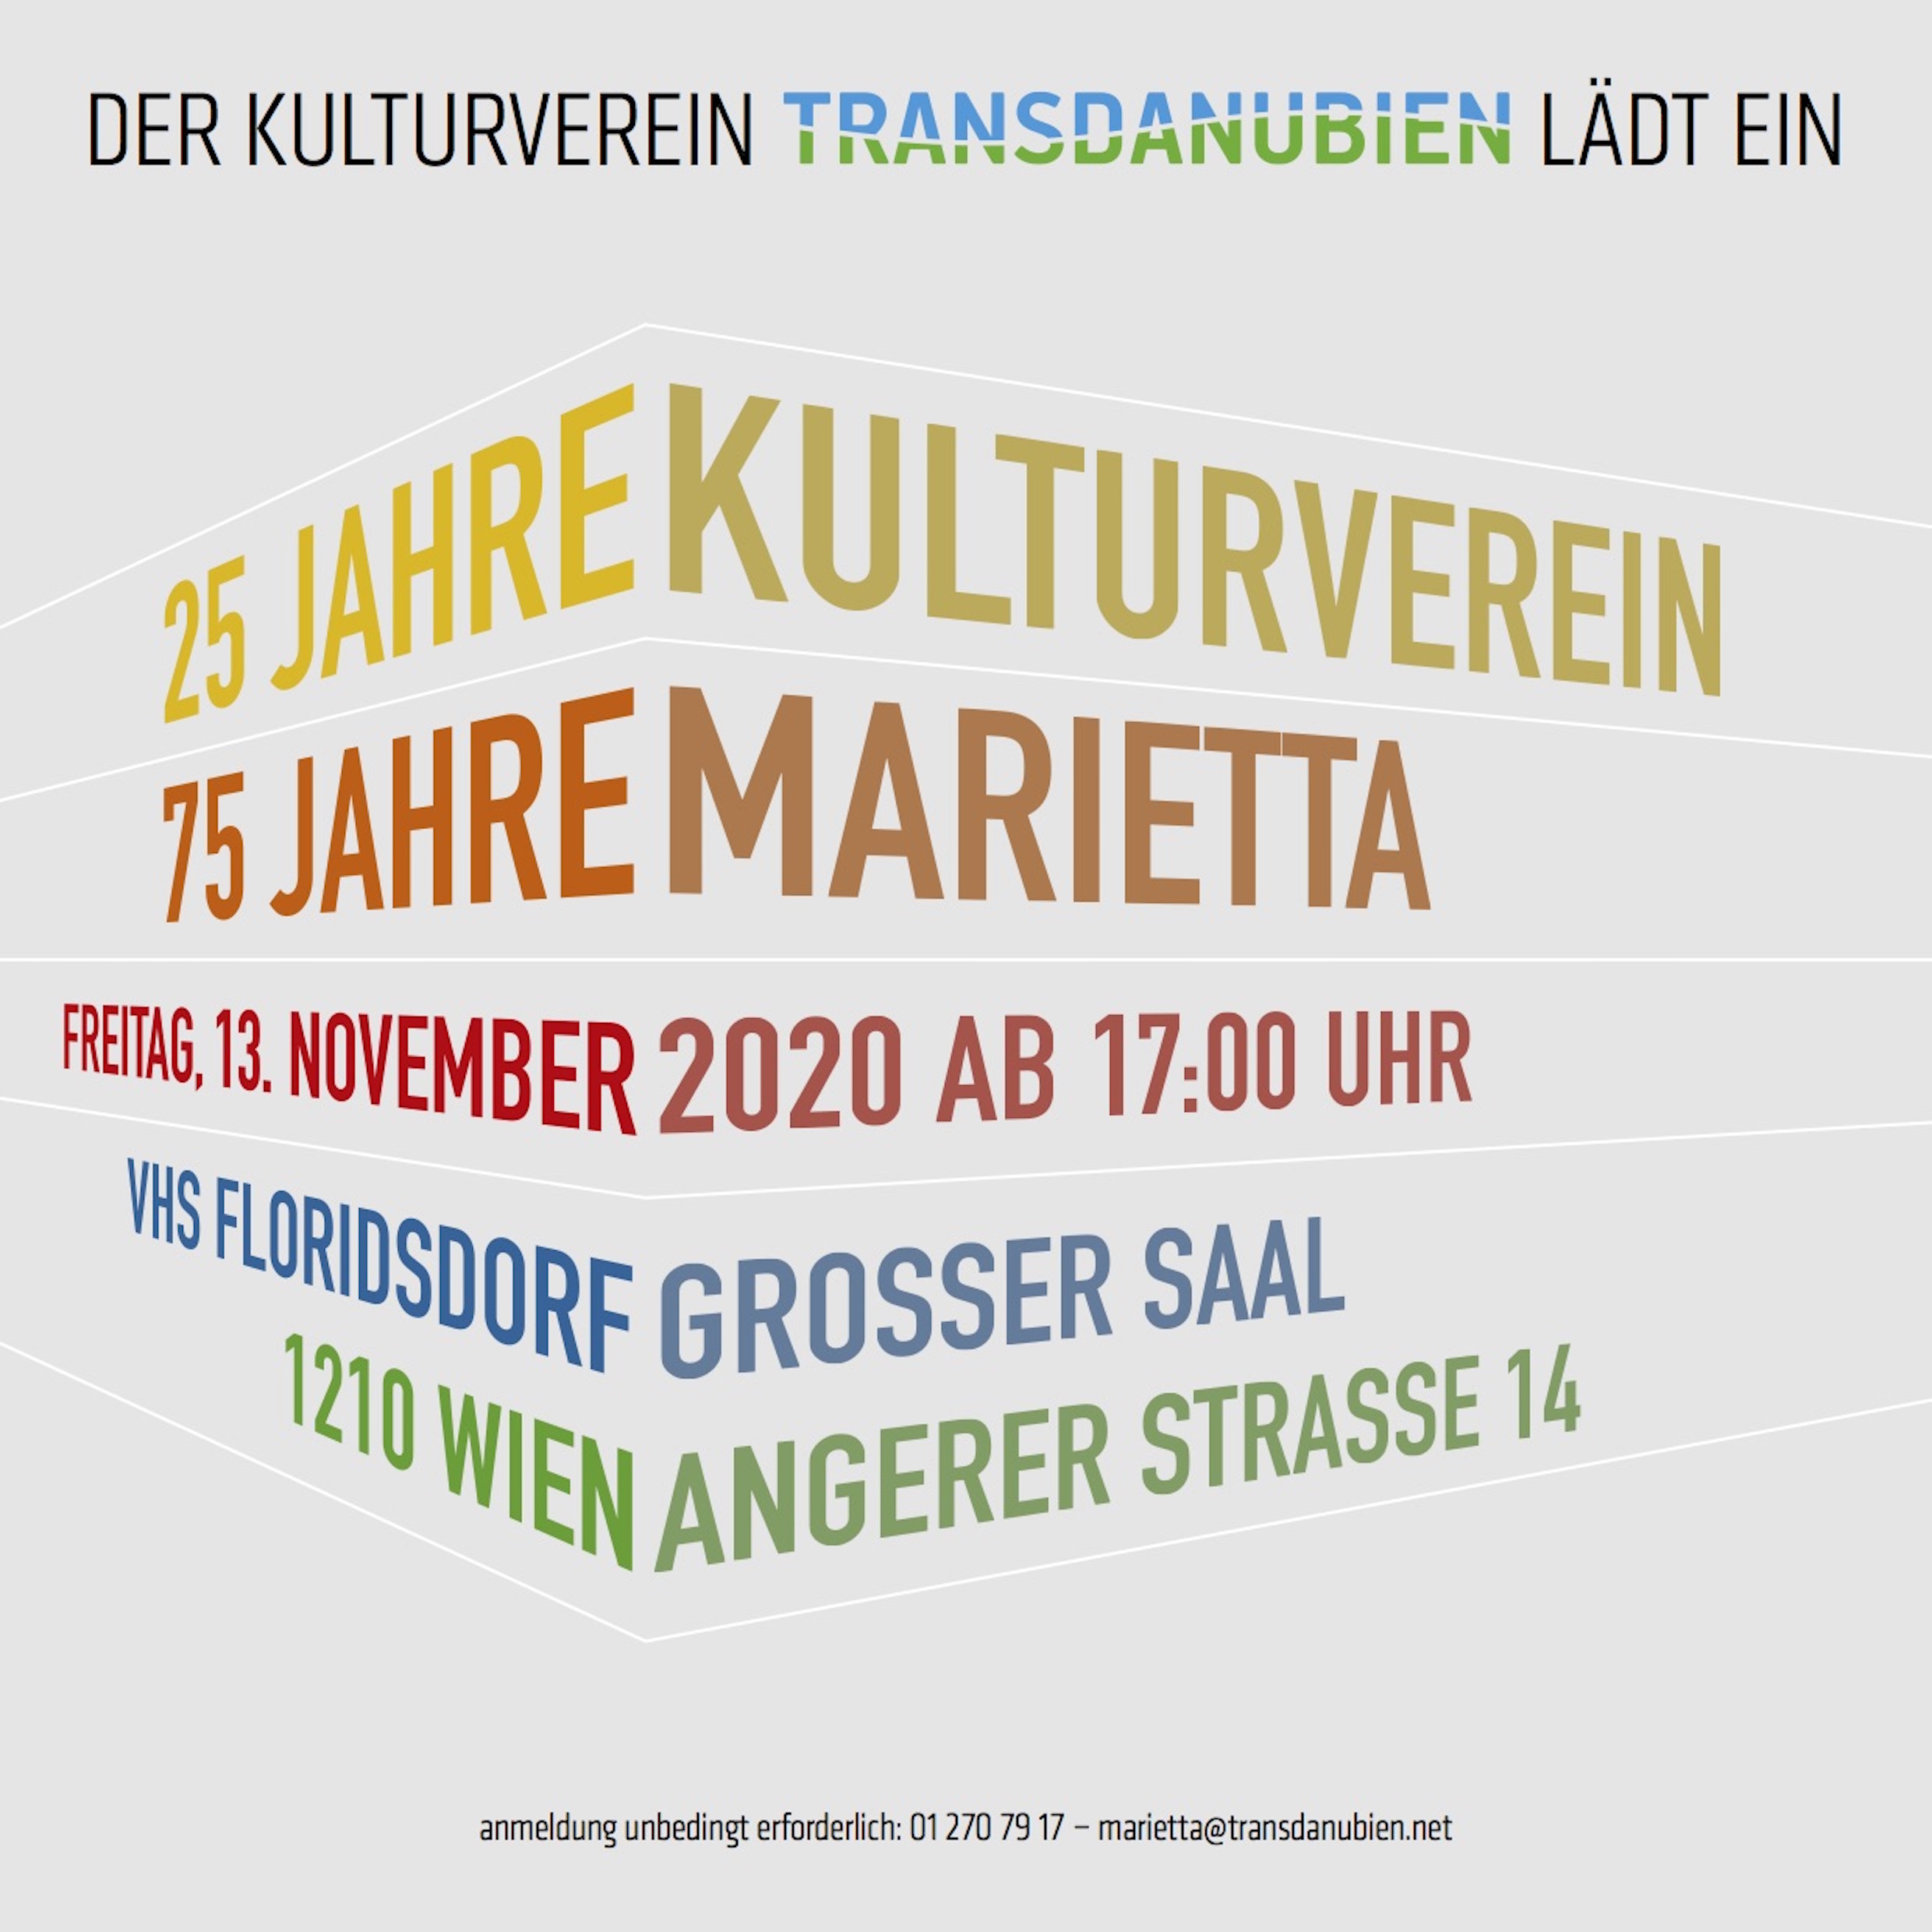 25 Jahre Kulturverein Transdanubien - Jubiläumsfest